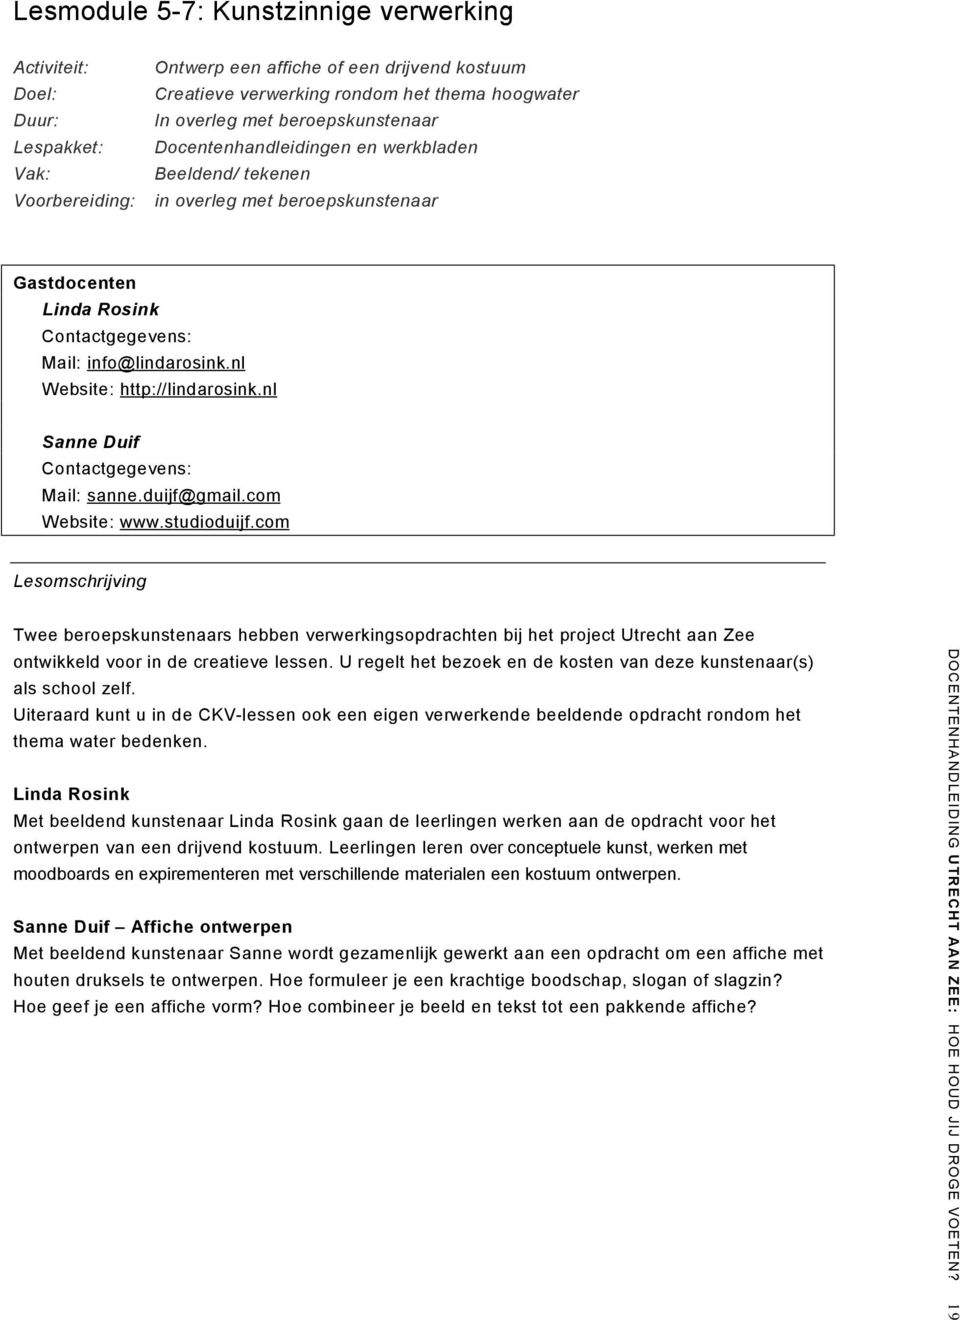 nl Website: http://lindarosink.nl Sanne Duif Contactgegevens: Mail: sanne.duijf@gmail.com Website: www.studioduijf.